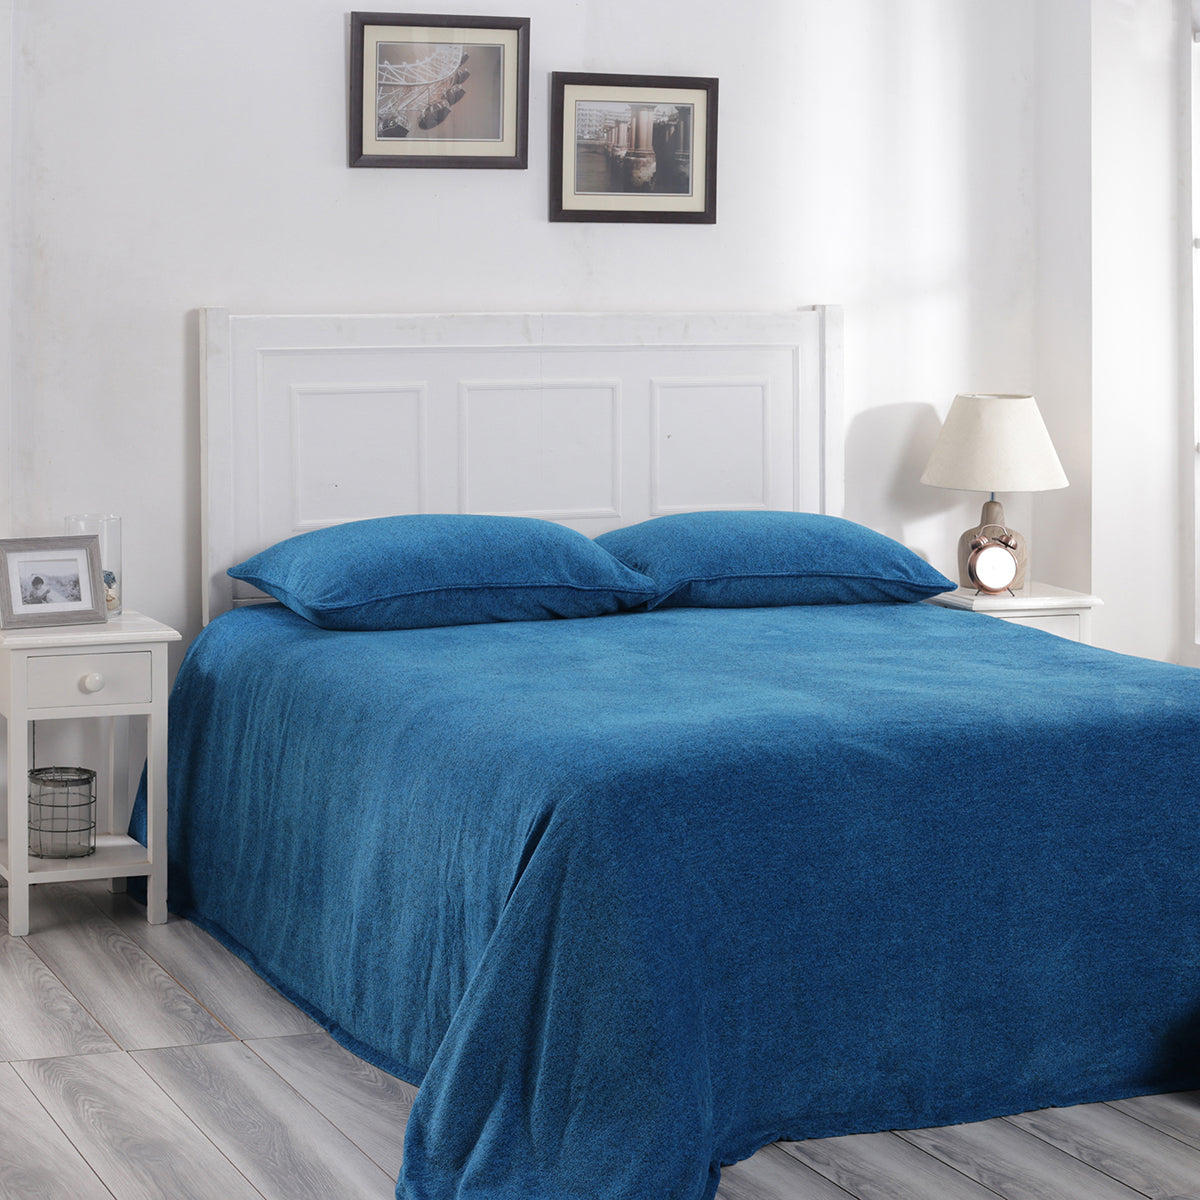 Charlotte Woven Reef Blue/ Black Bed Cover/Blanket